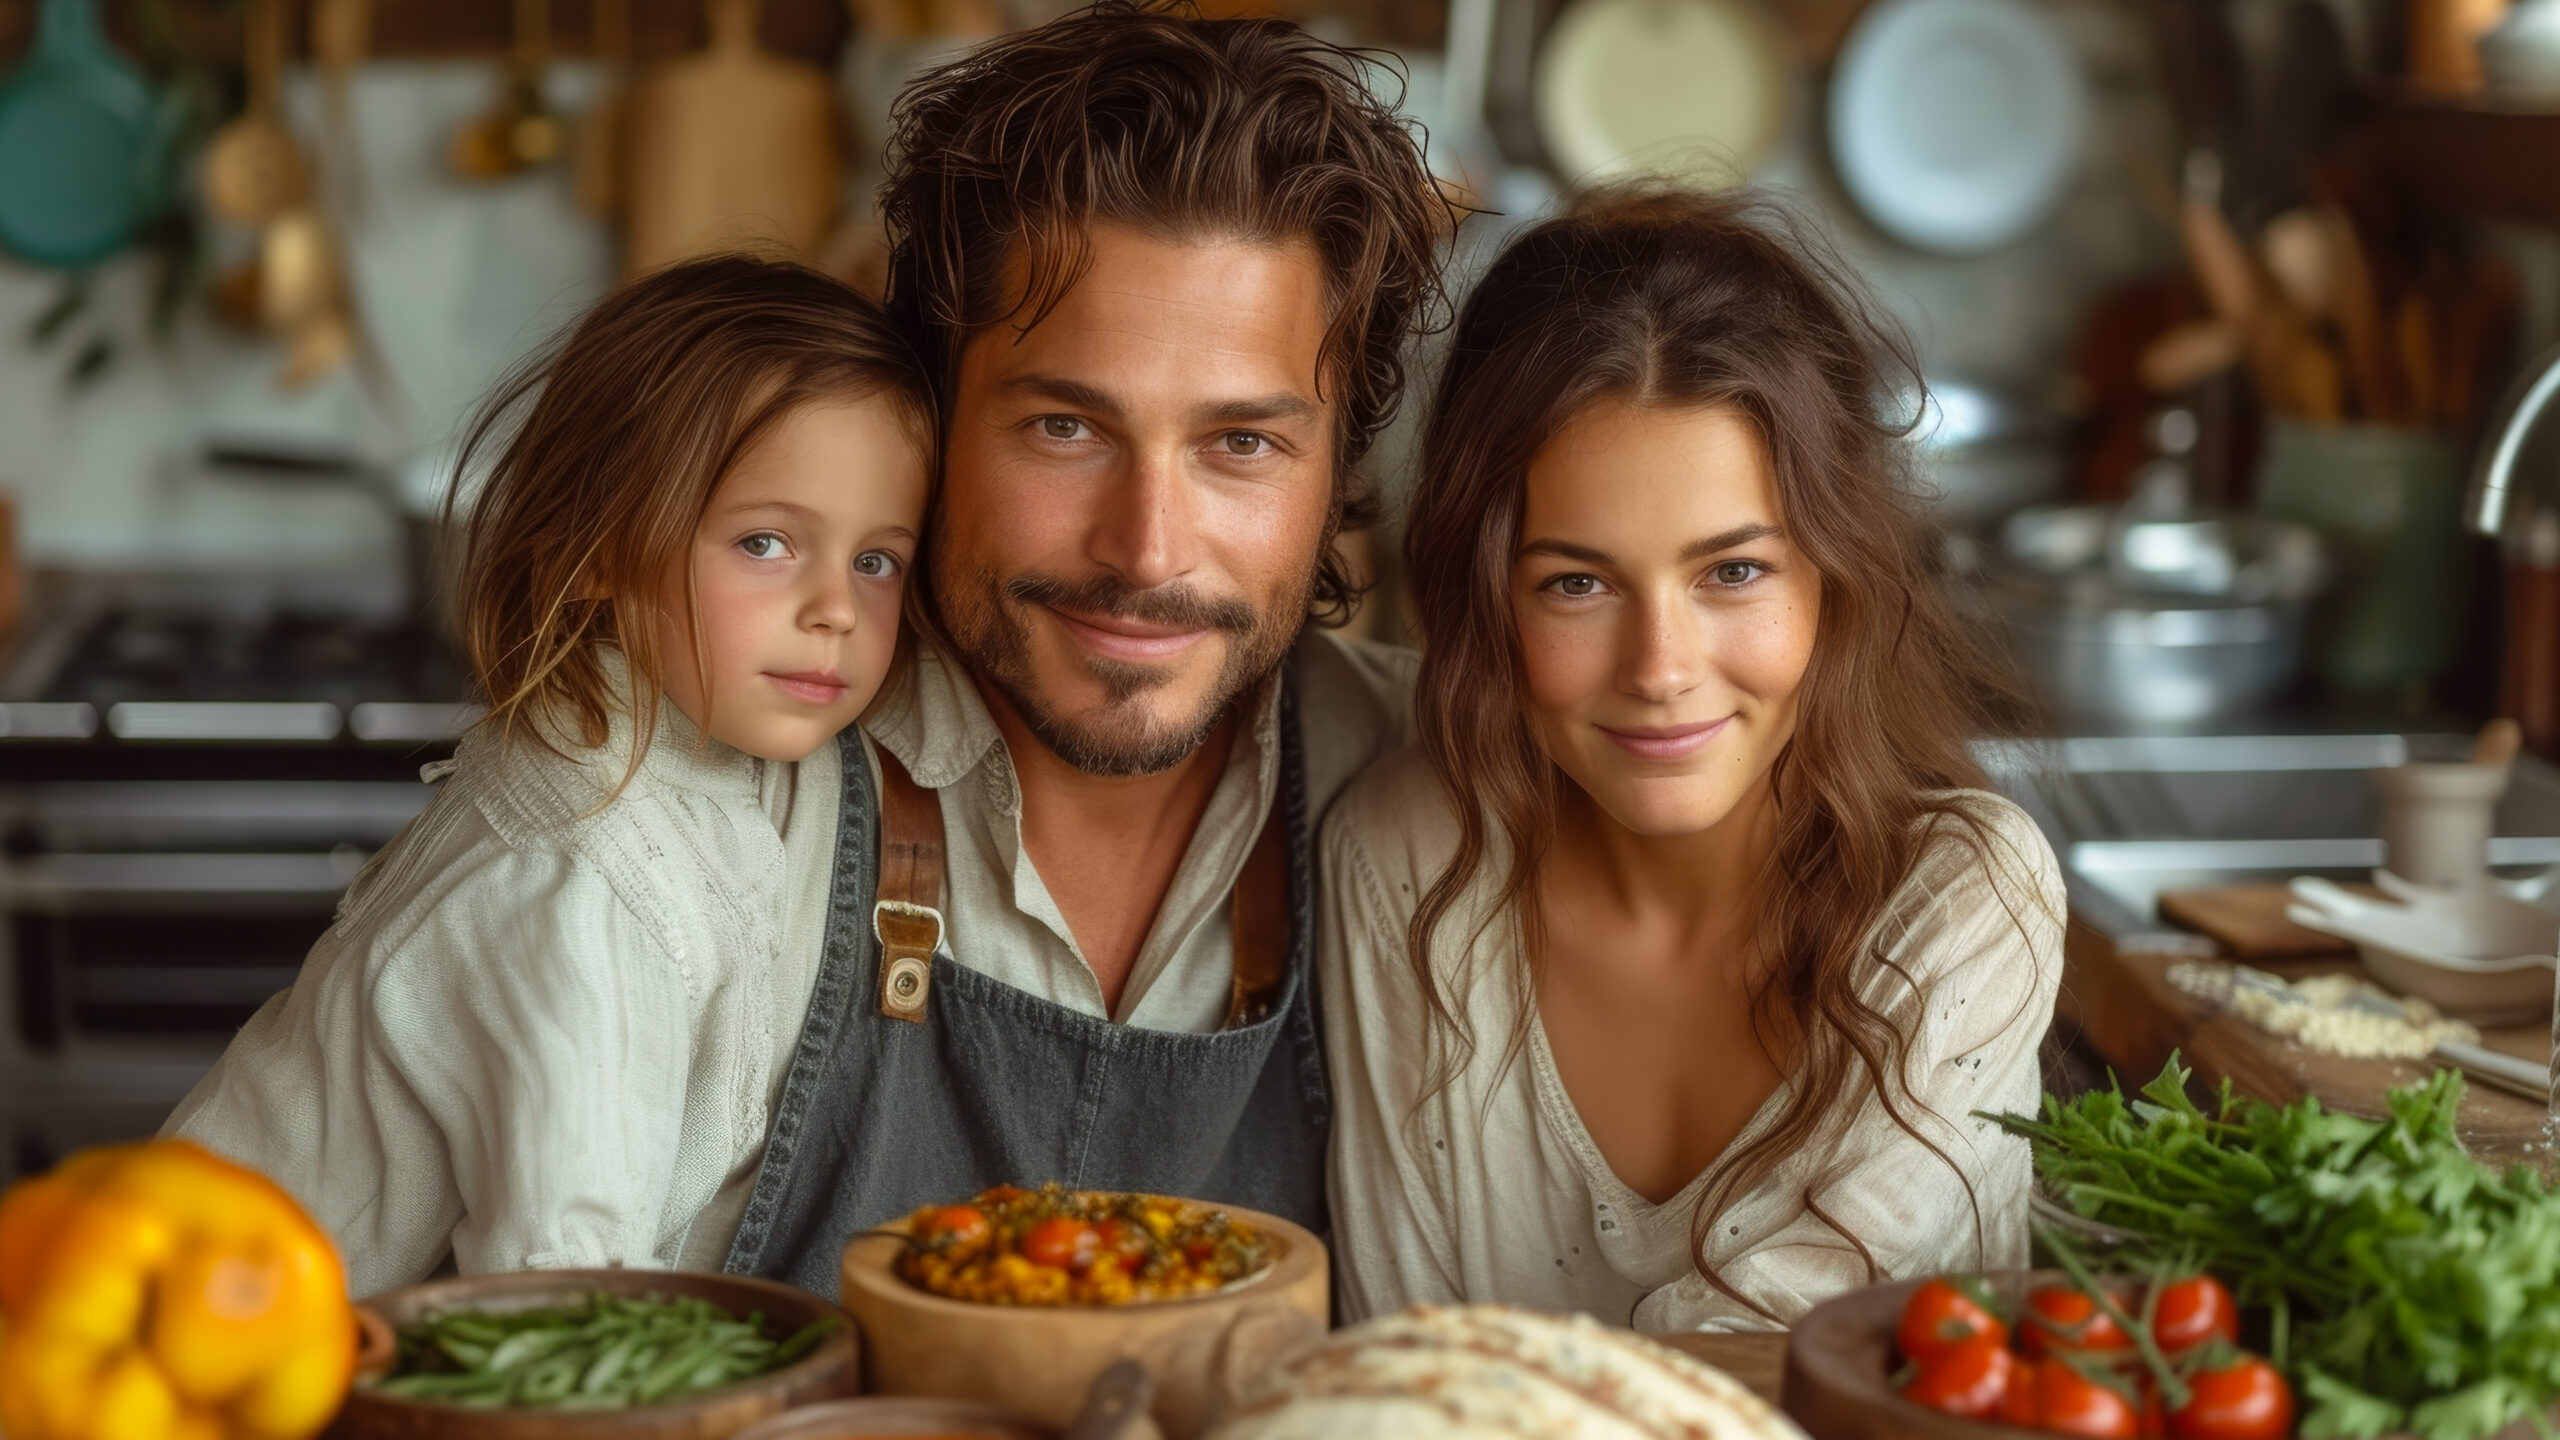 Tom Libertiny, Family and Food, Retail Strategy